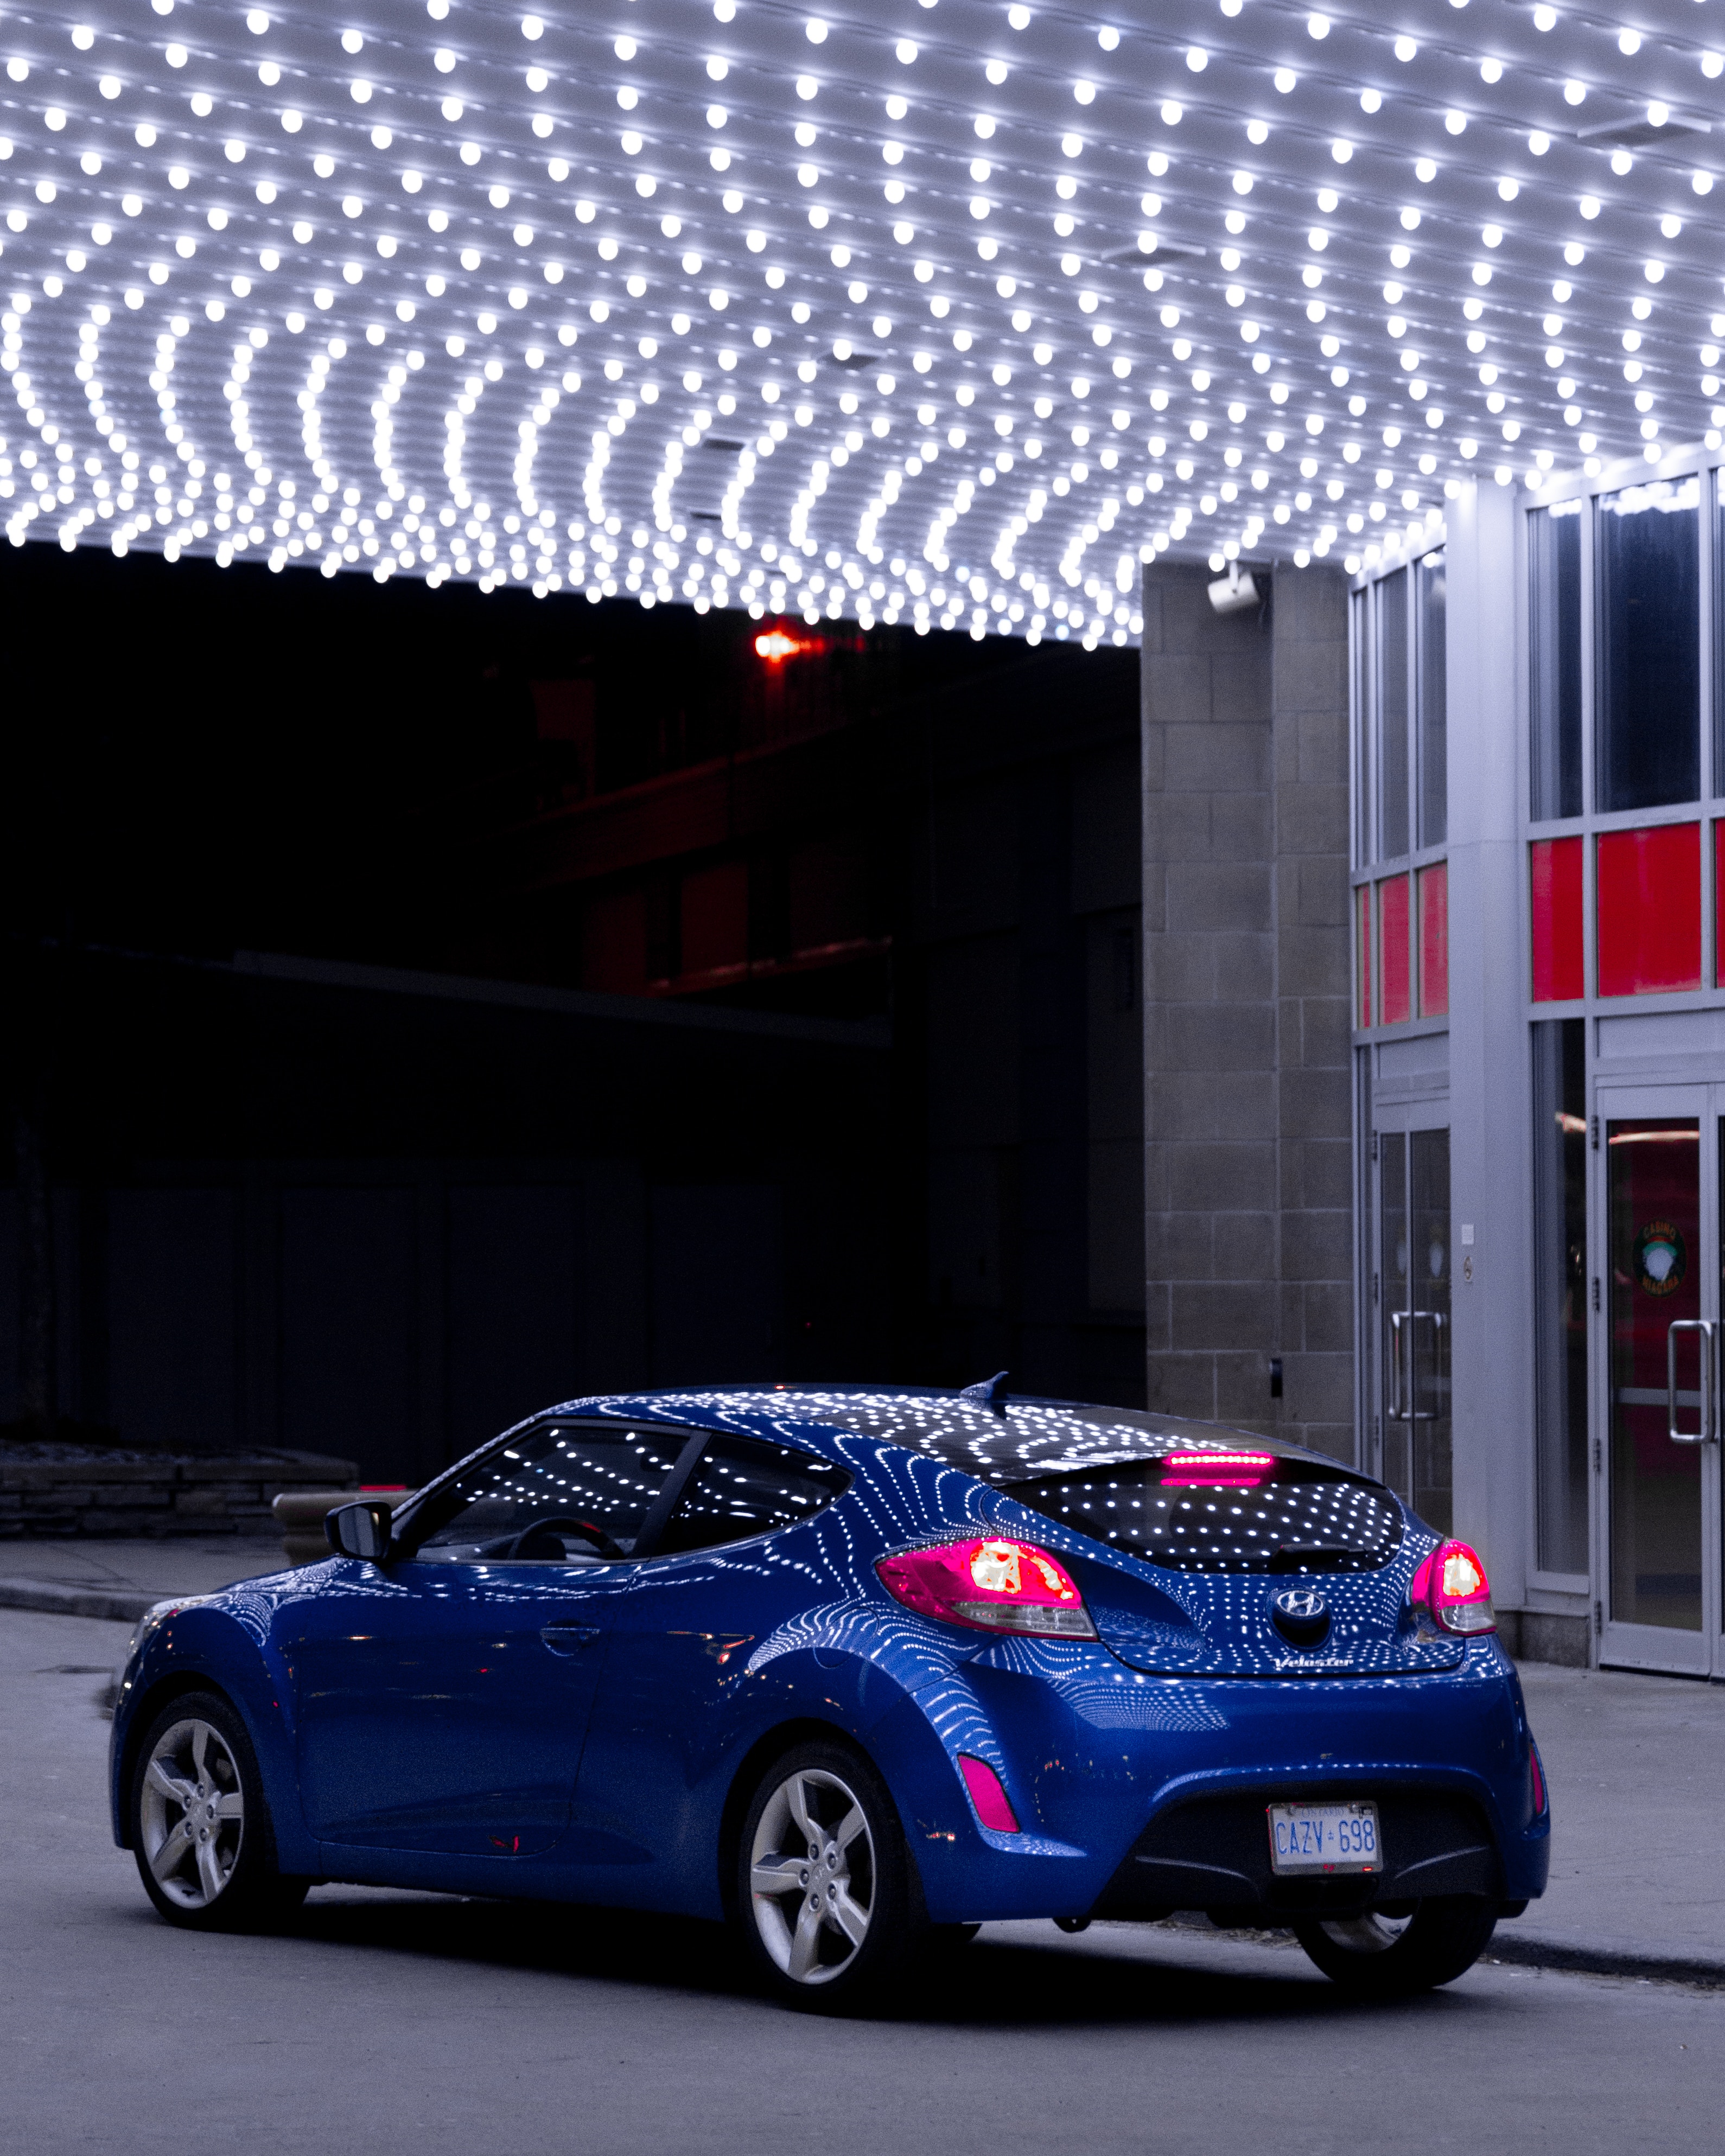 shine, hyundai, cars, blue, light, side view, street